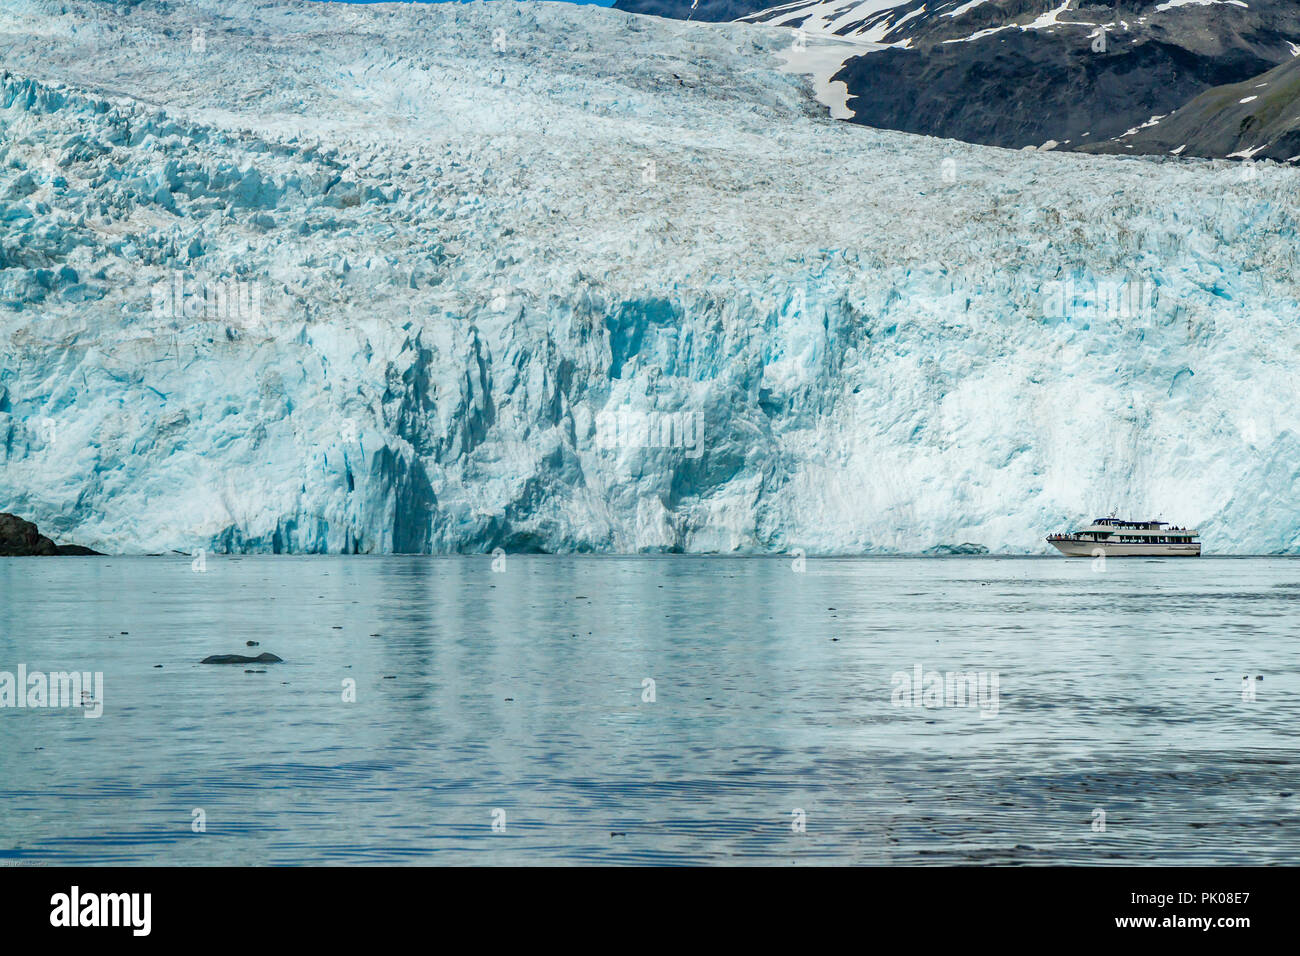 Harriman ghiacciaio Aialik Bay, Alaska, Stati Uniti d'America. Un catamarano barca è sopraffatte da enormi blue ice ghiacciaio in background. Foto Stock